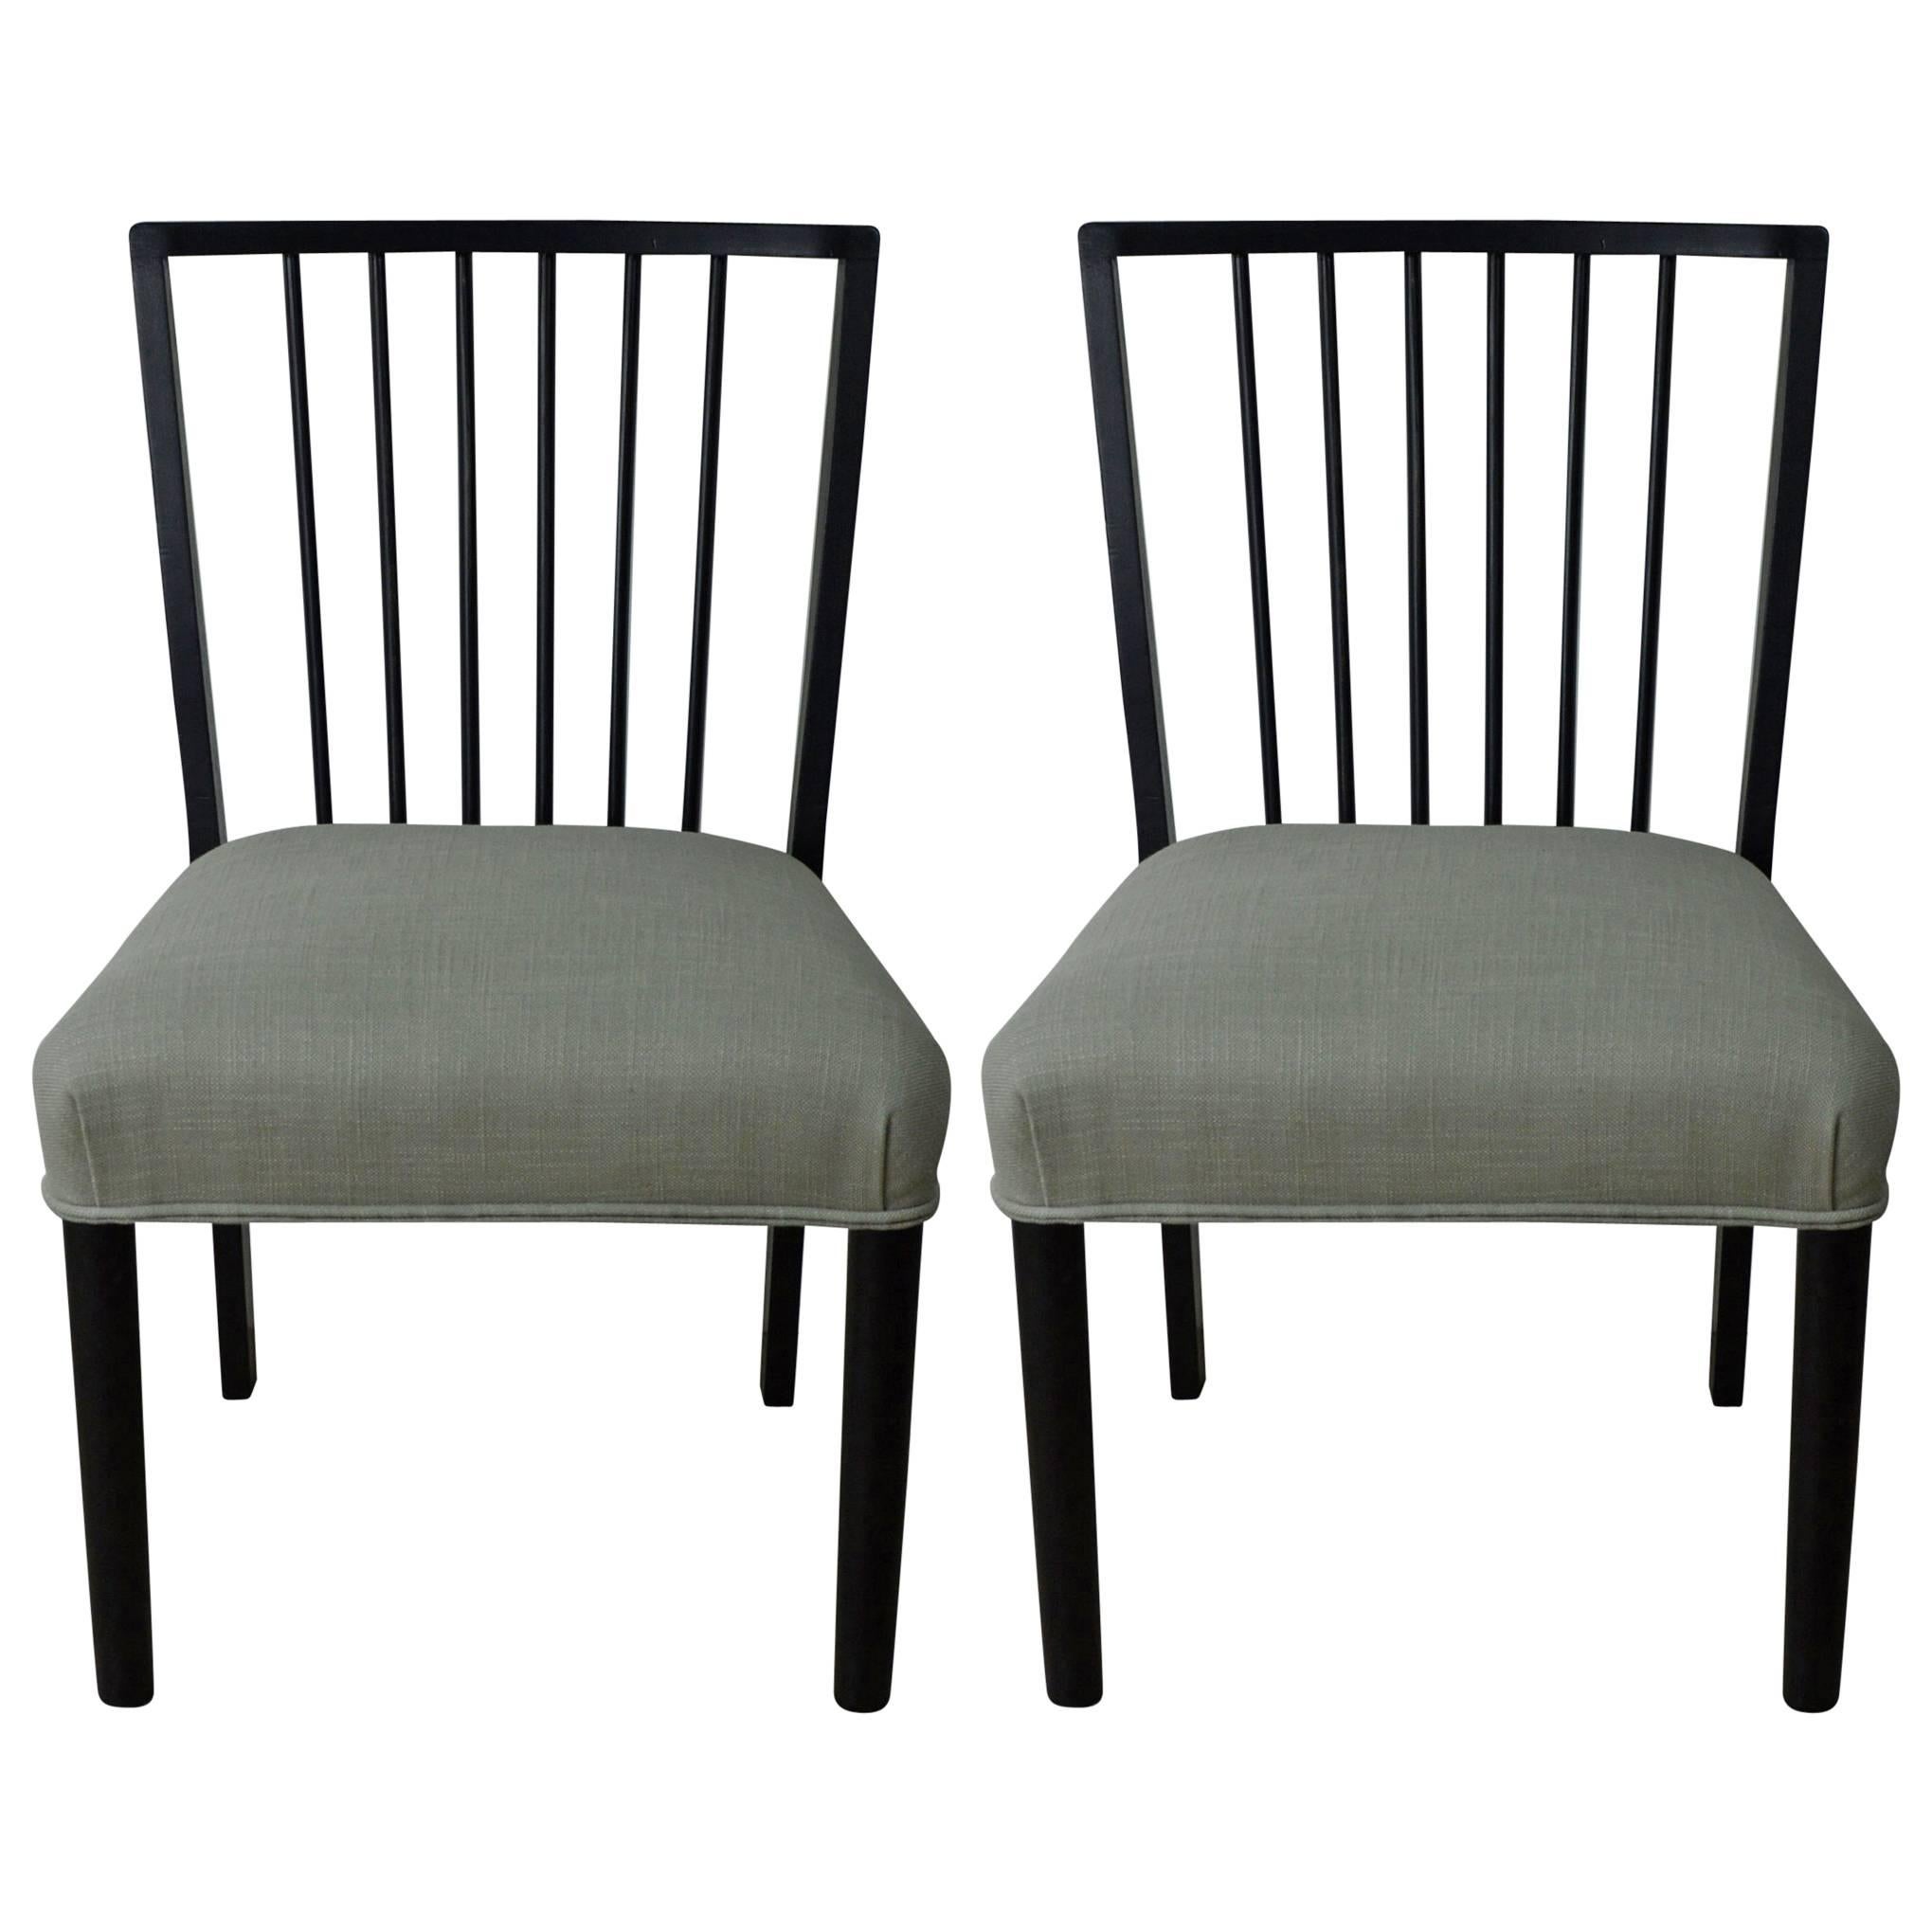 Mid-Century Ebonized Spindle Back Side Chair. ( One left )